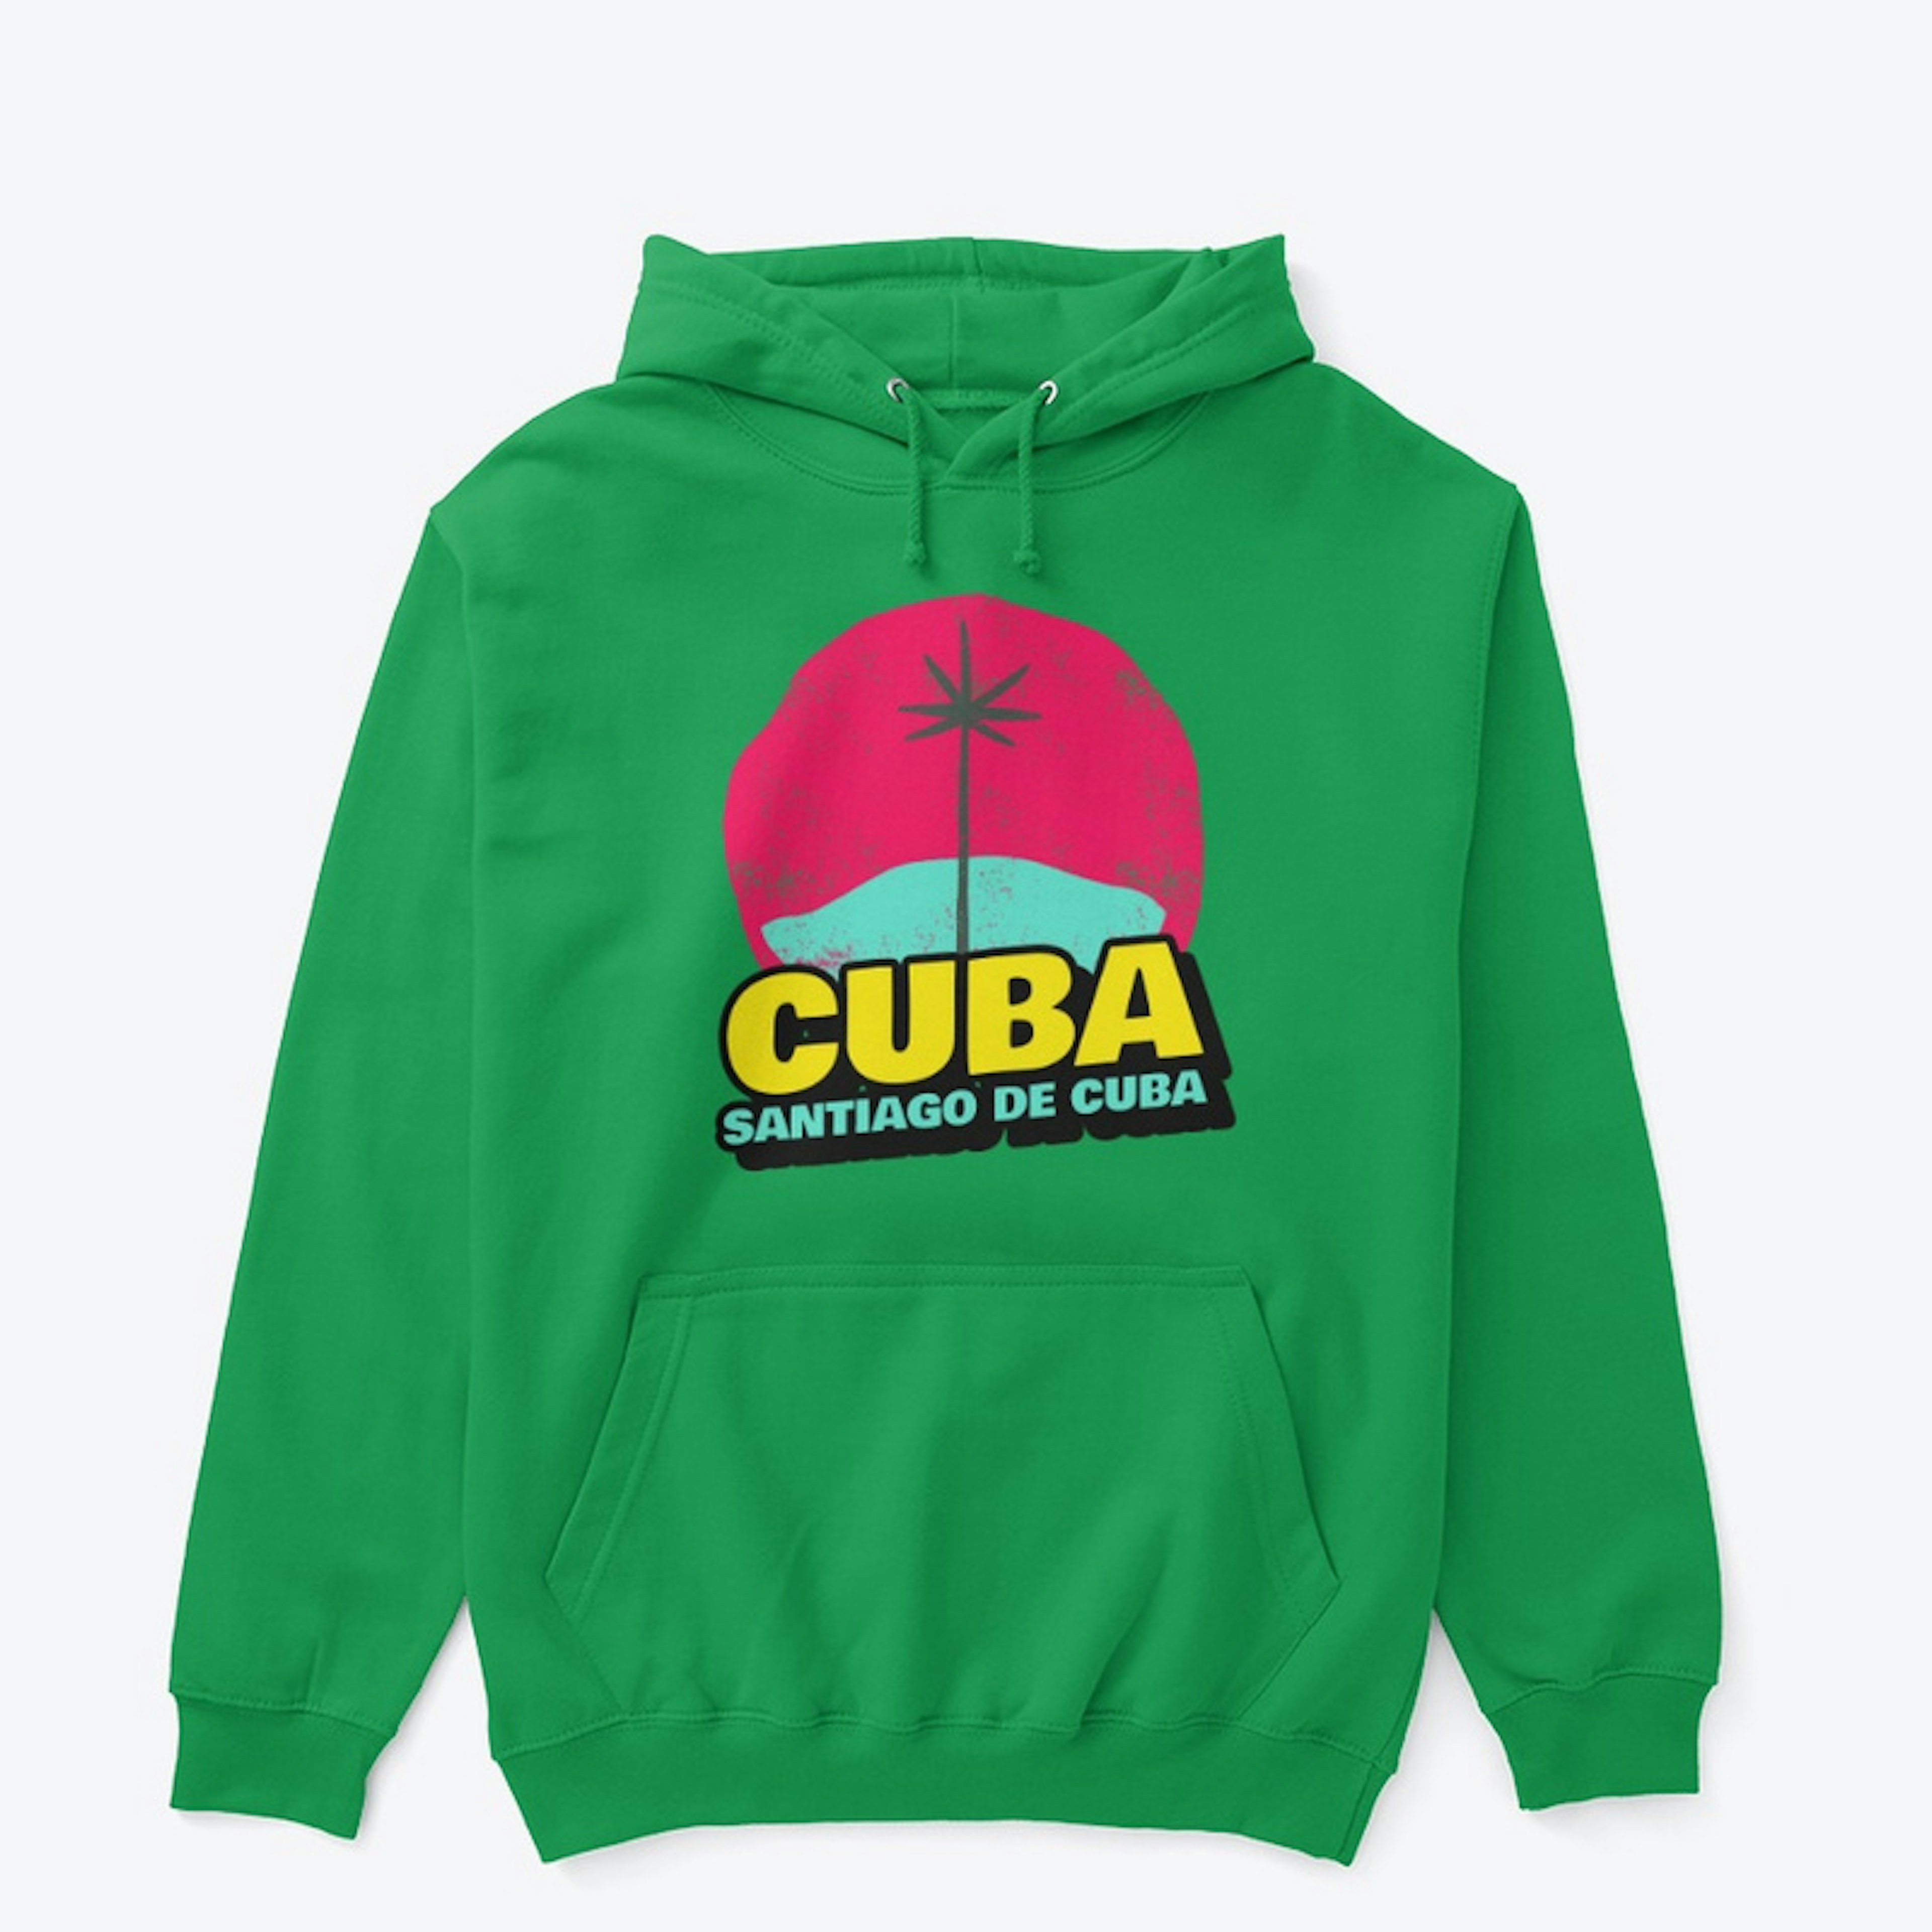 SANTIAGO DE CUBA, CUBA